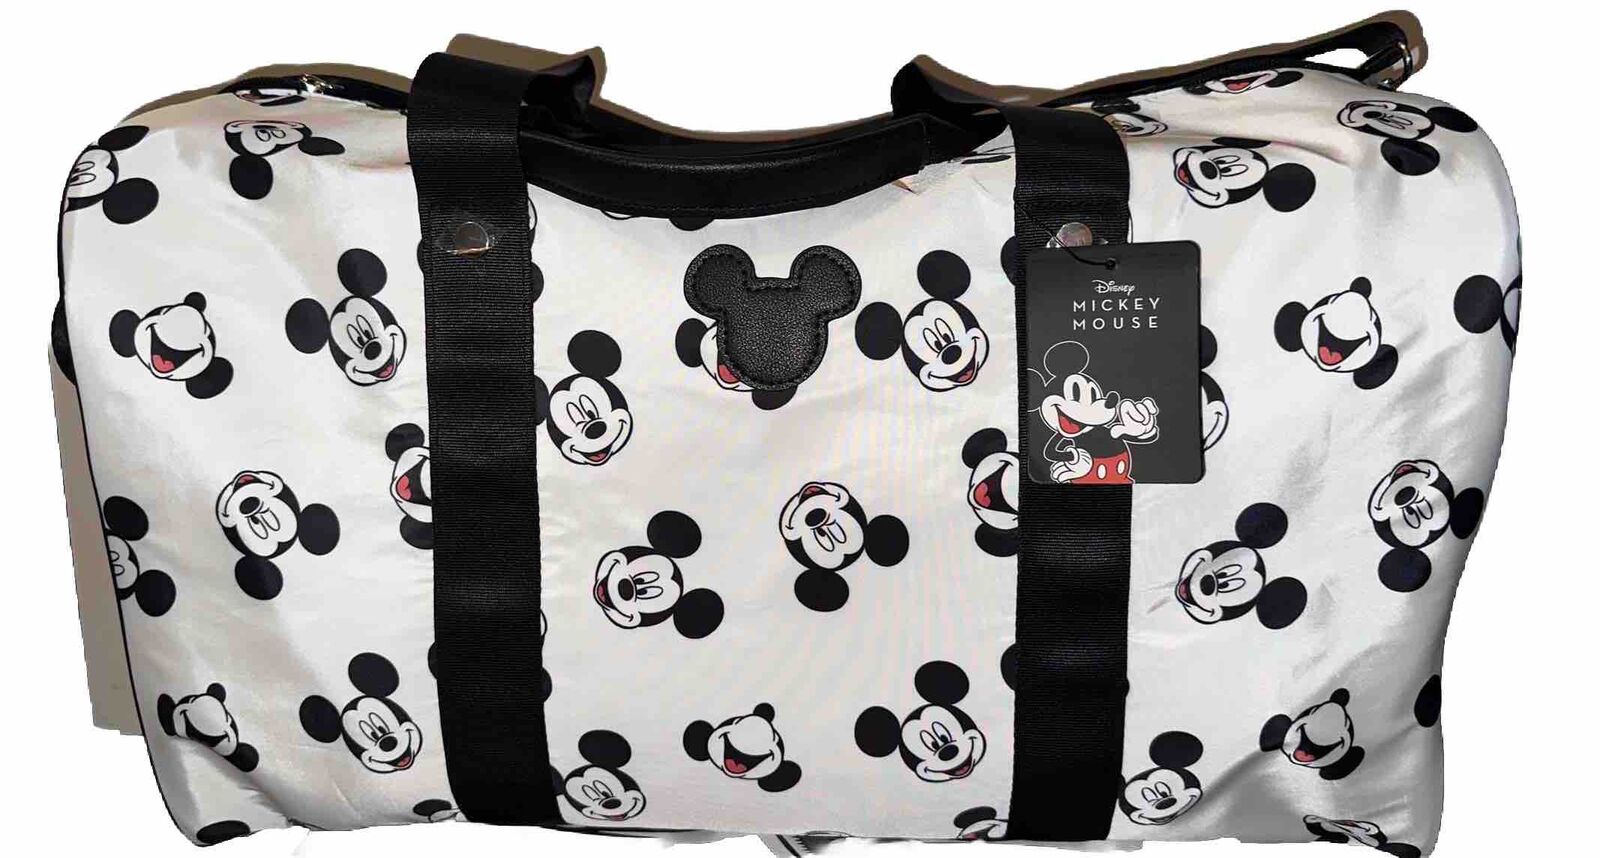 Disney Mickey Mouse Weekender Duffle Bag Black & White Tote Bag New